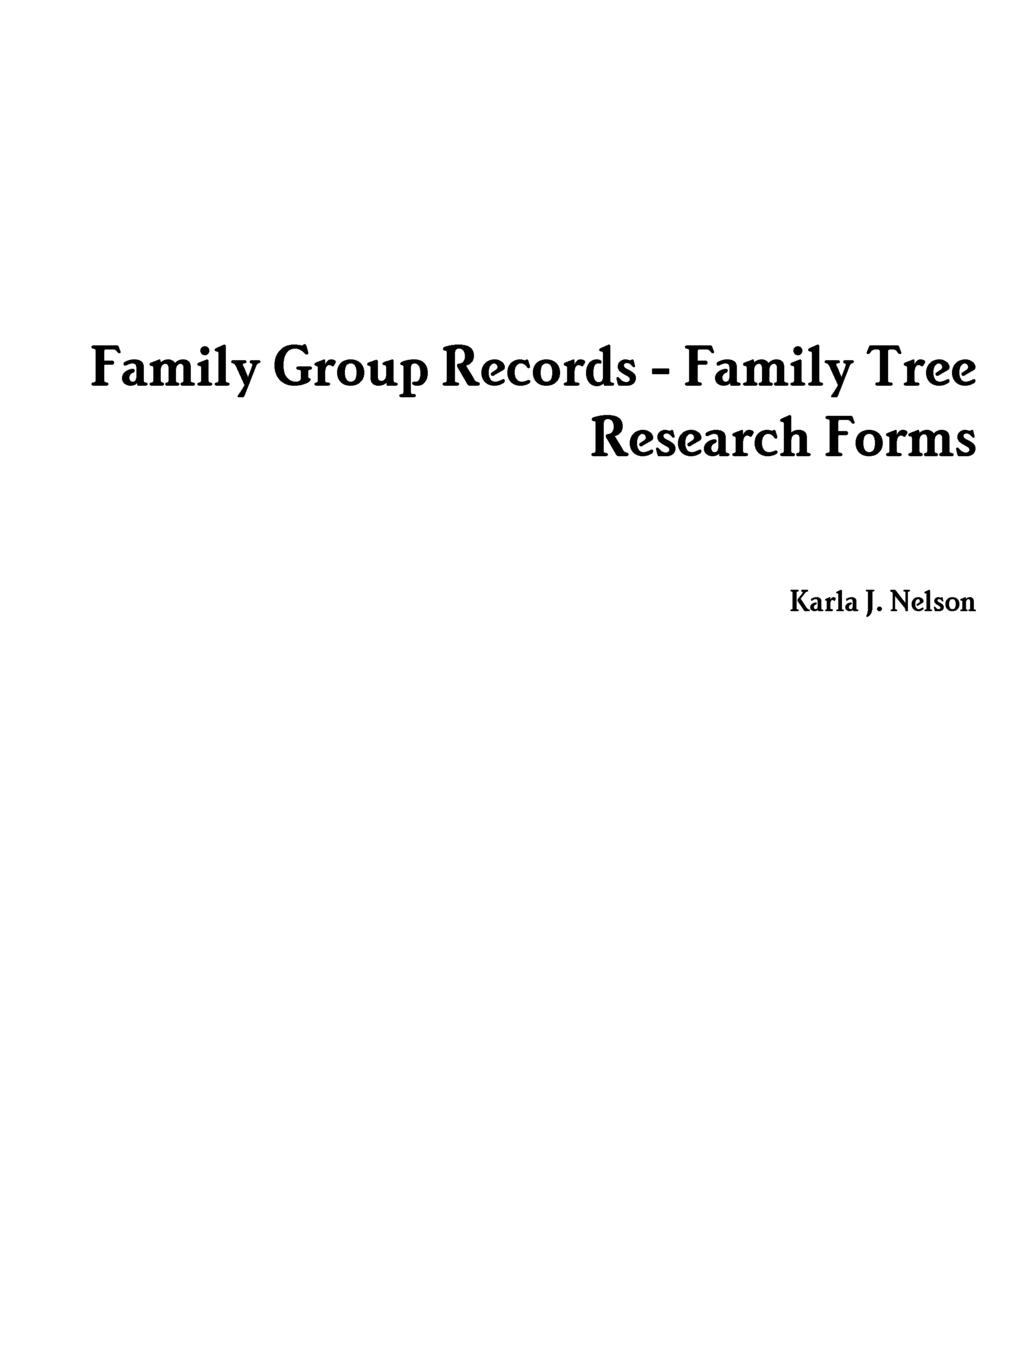 Karla J. Nelson Family Group Records